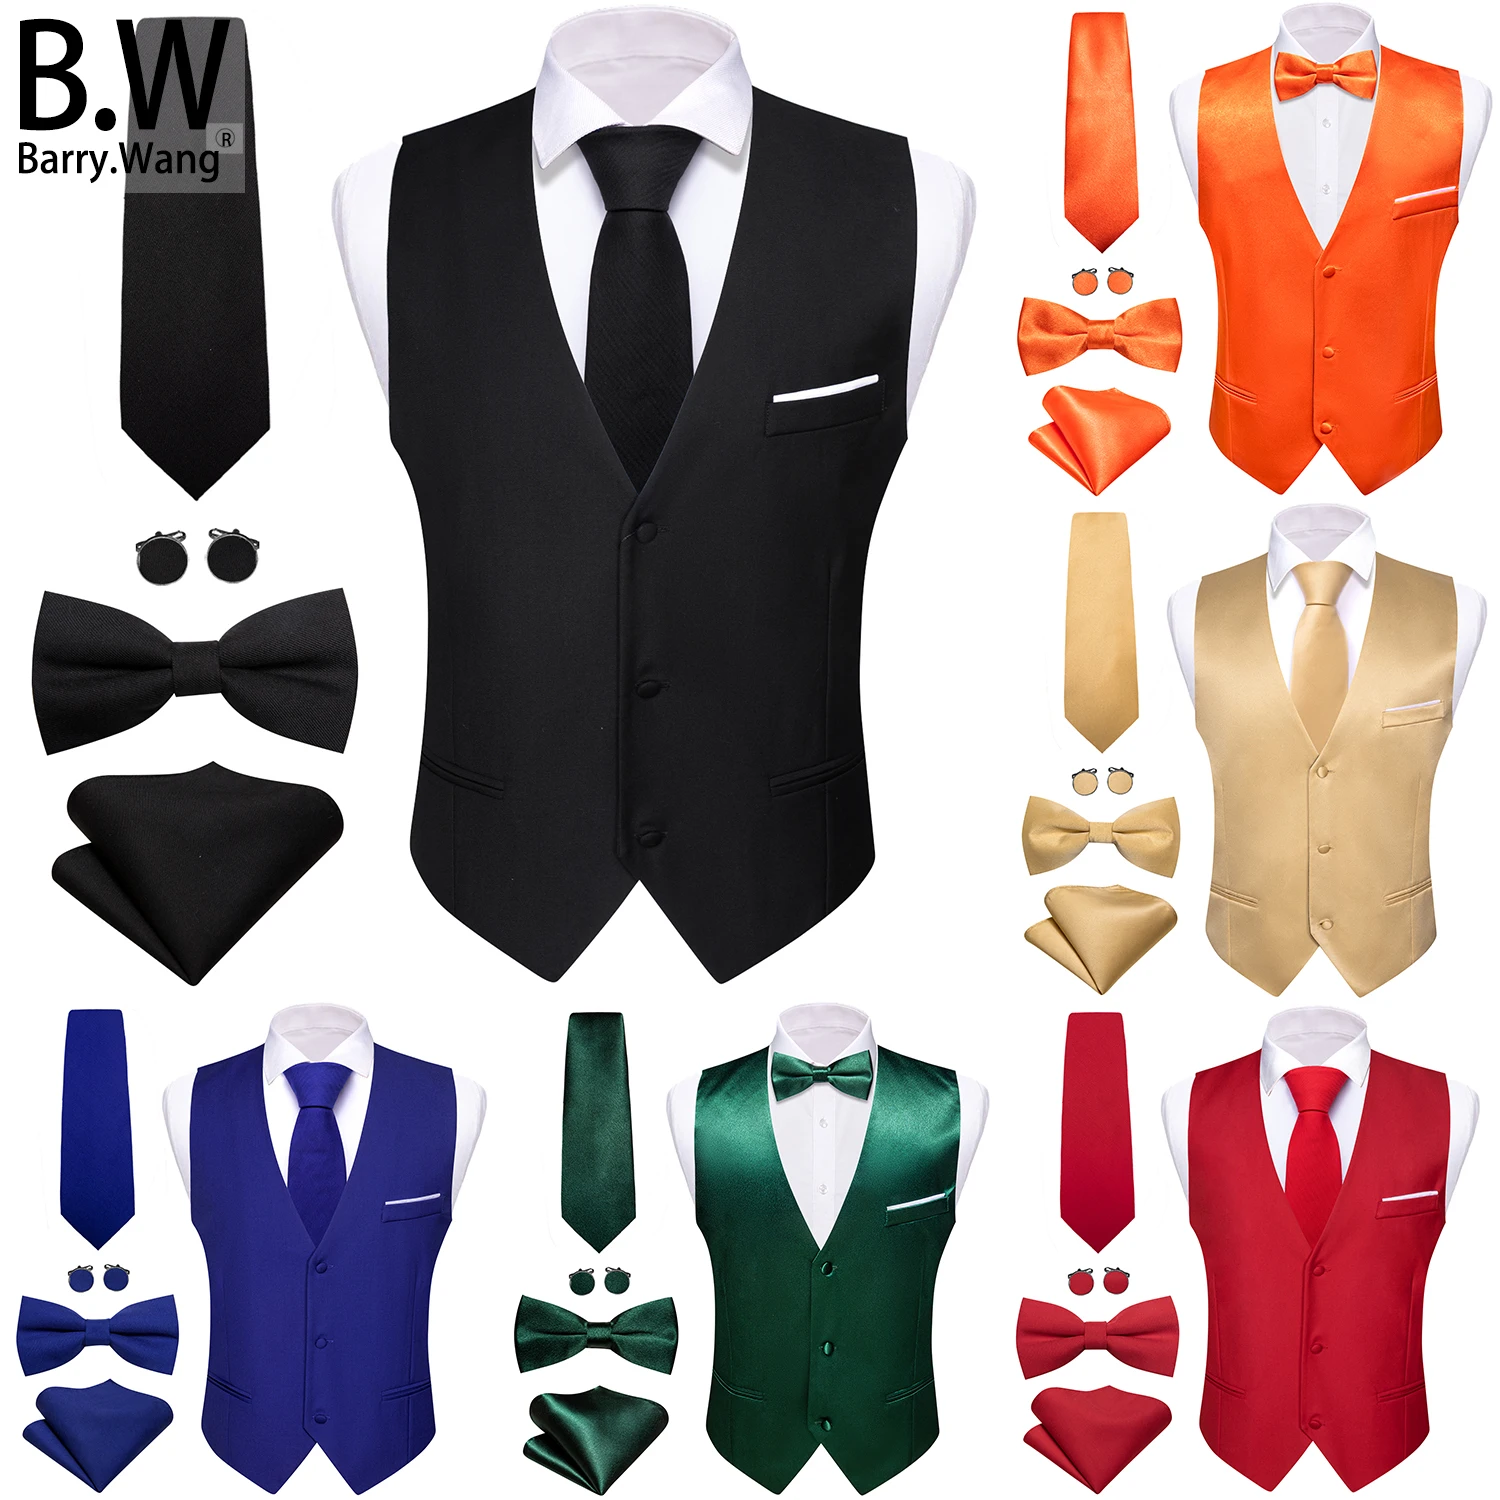 

Barry.Wang Stylish Silk Men Vest Tie Bowtie Hanky Cufflinks Set 3 Button Waistcoat Sleeveless Jacket Male Wedding Business Party